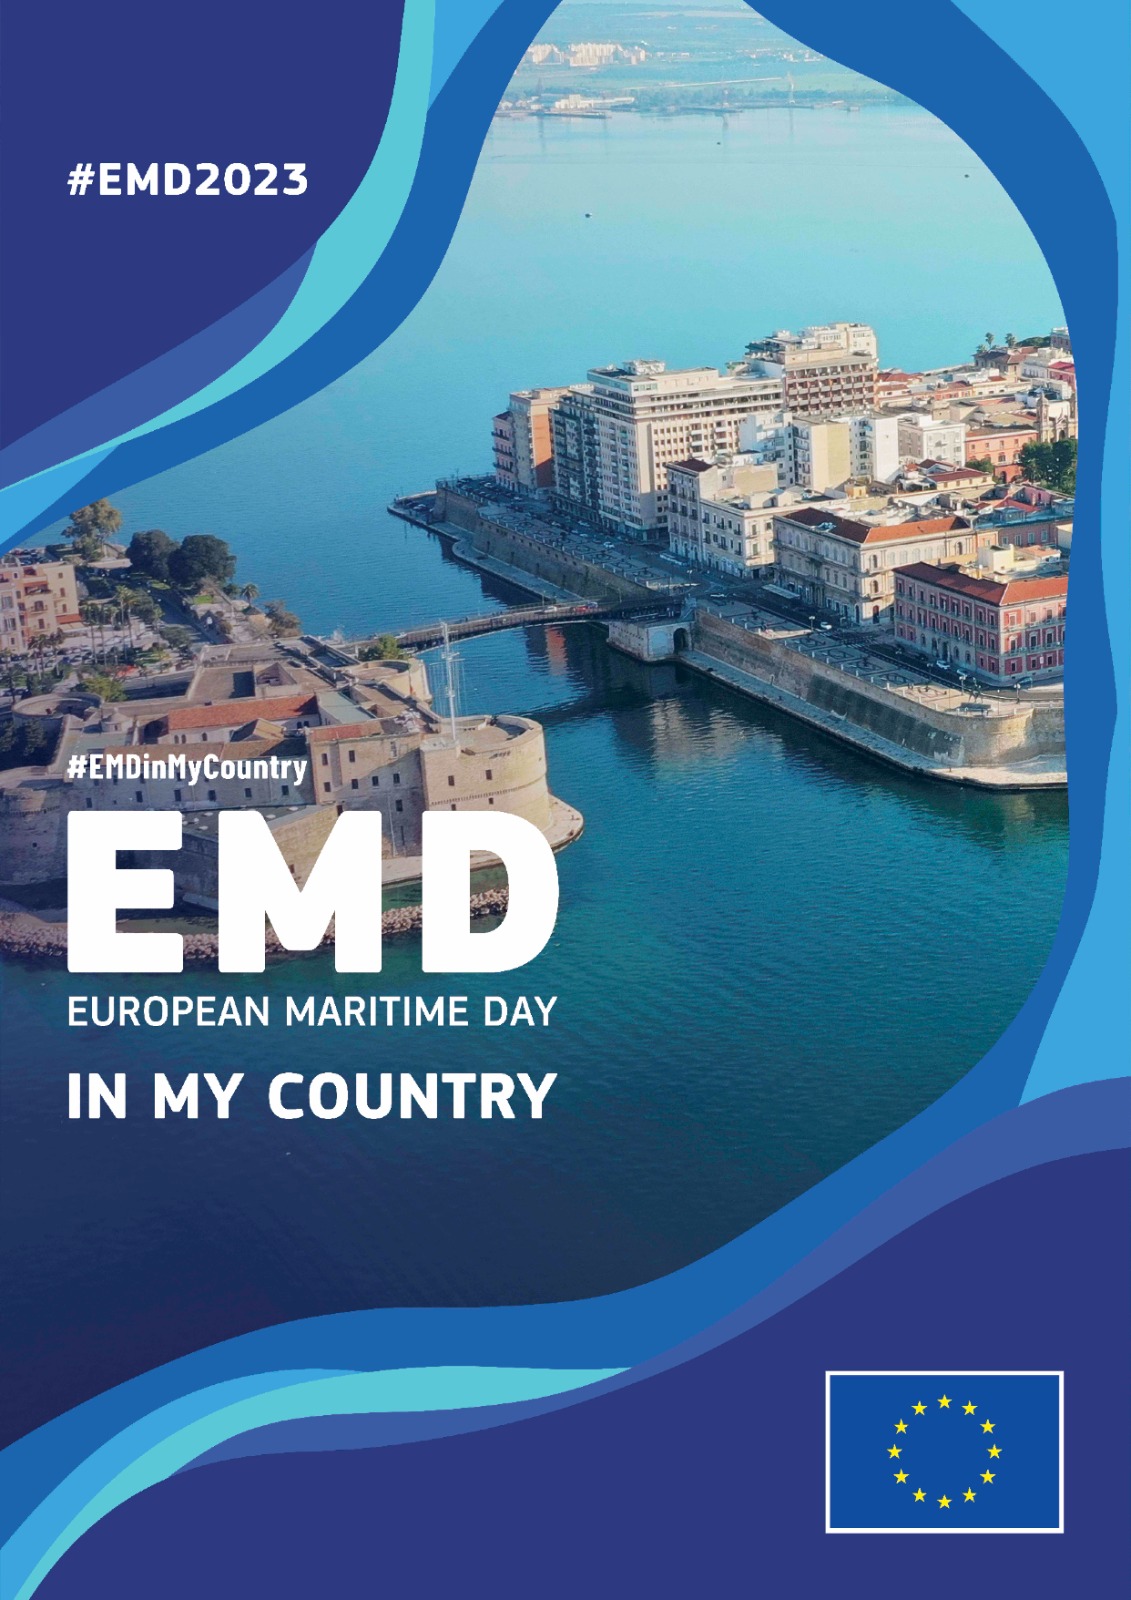 Taranto aderisce alla campagna “European Maritime Day in My Country”